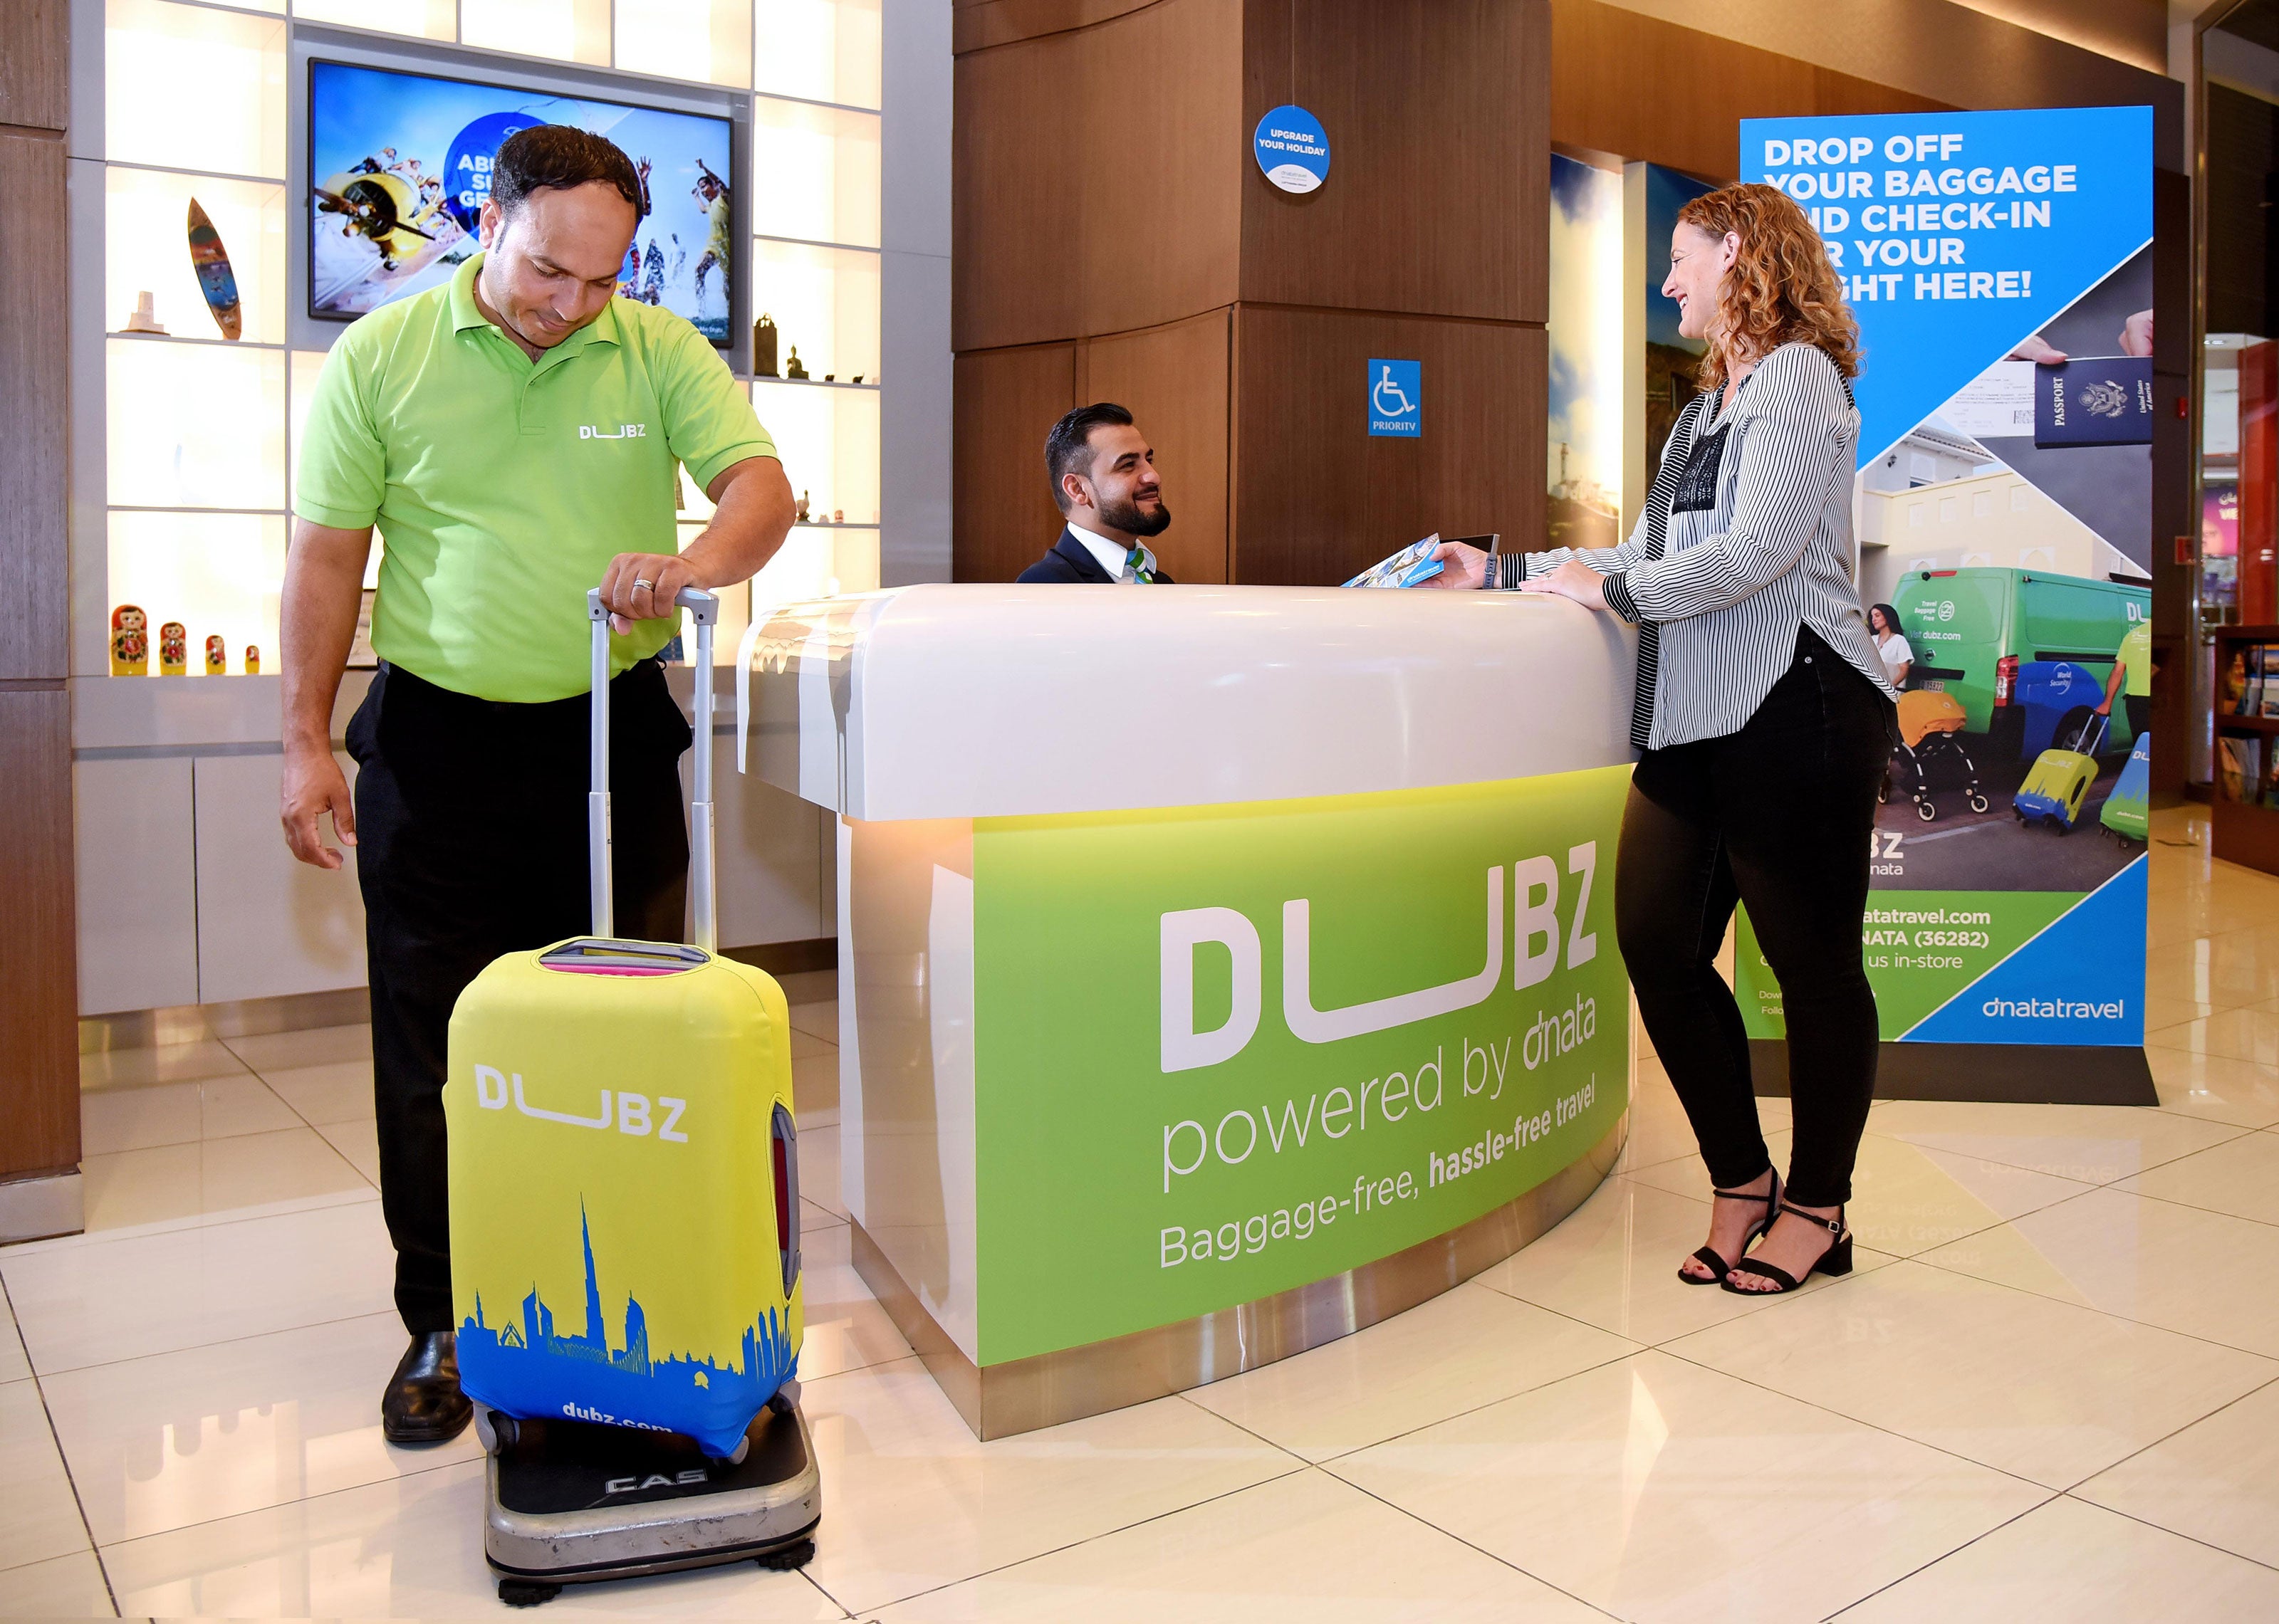 dnata’s DUBZ checks in passengers for flights in The Dubai Mall